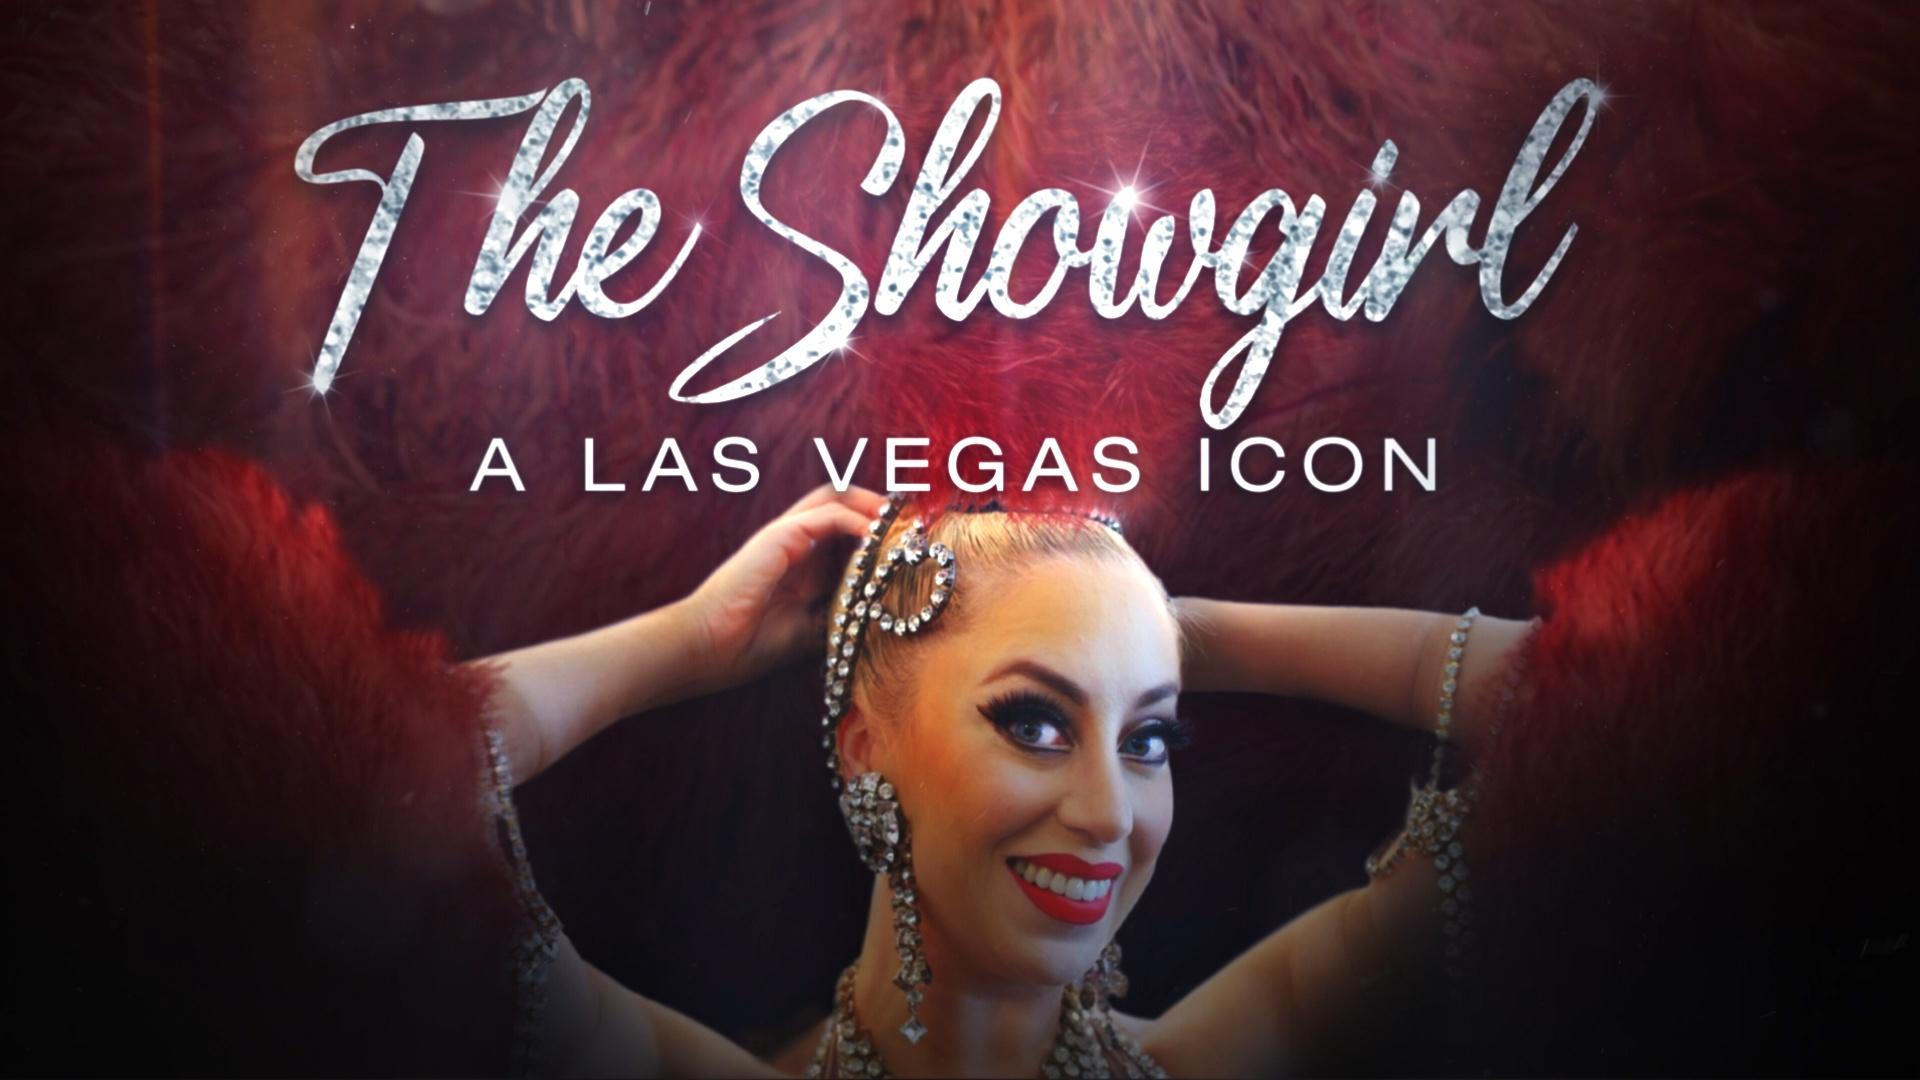 Showgirl Video: The last peep show in Las Vegas - BBC News